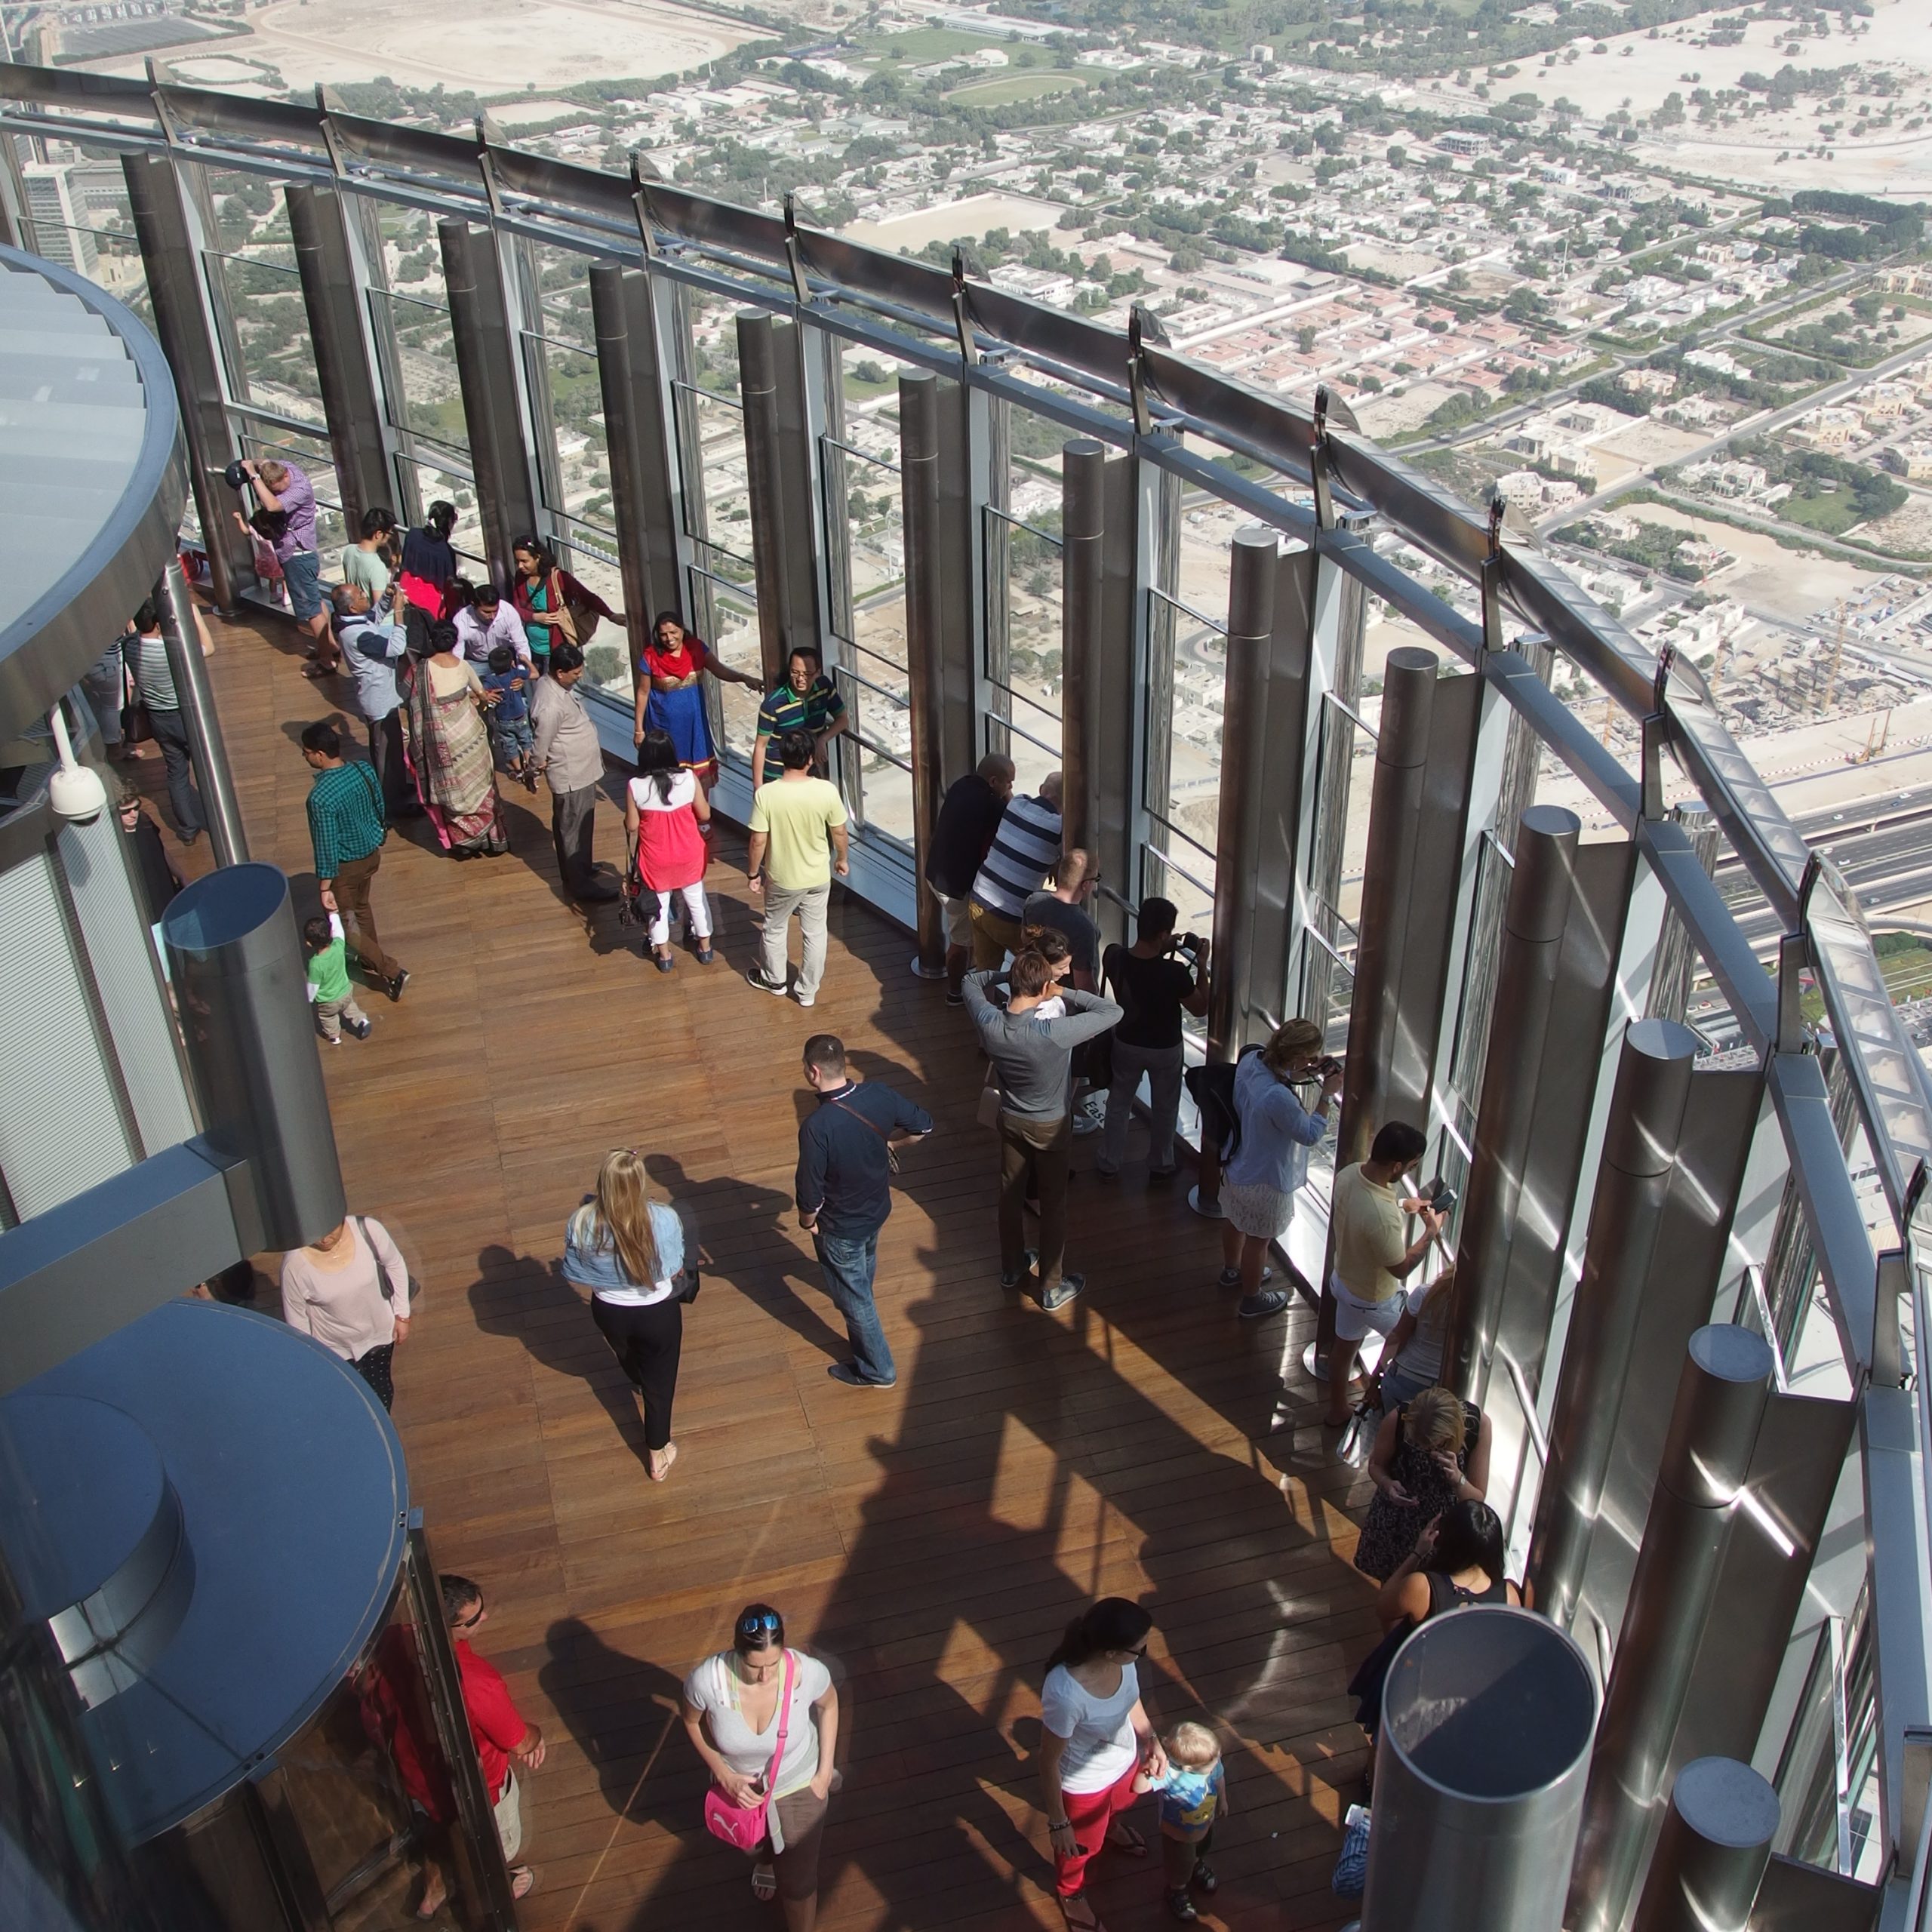 Burj khalifa at the top 124 to 125th floor